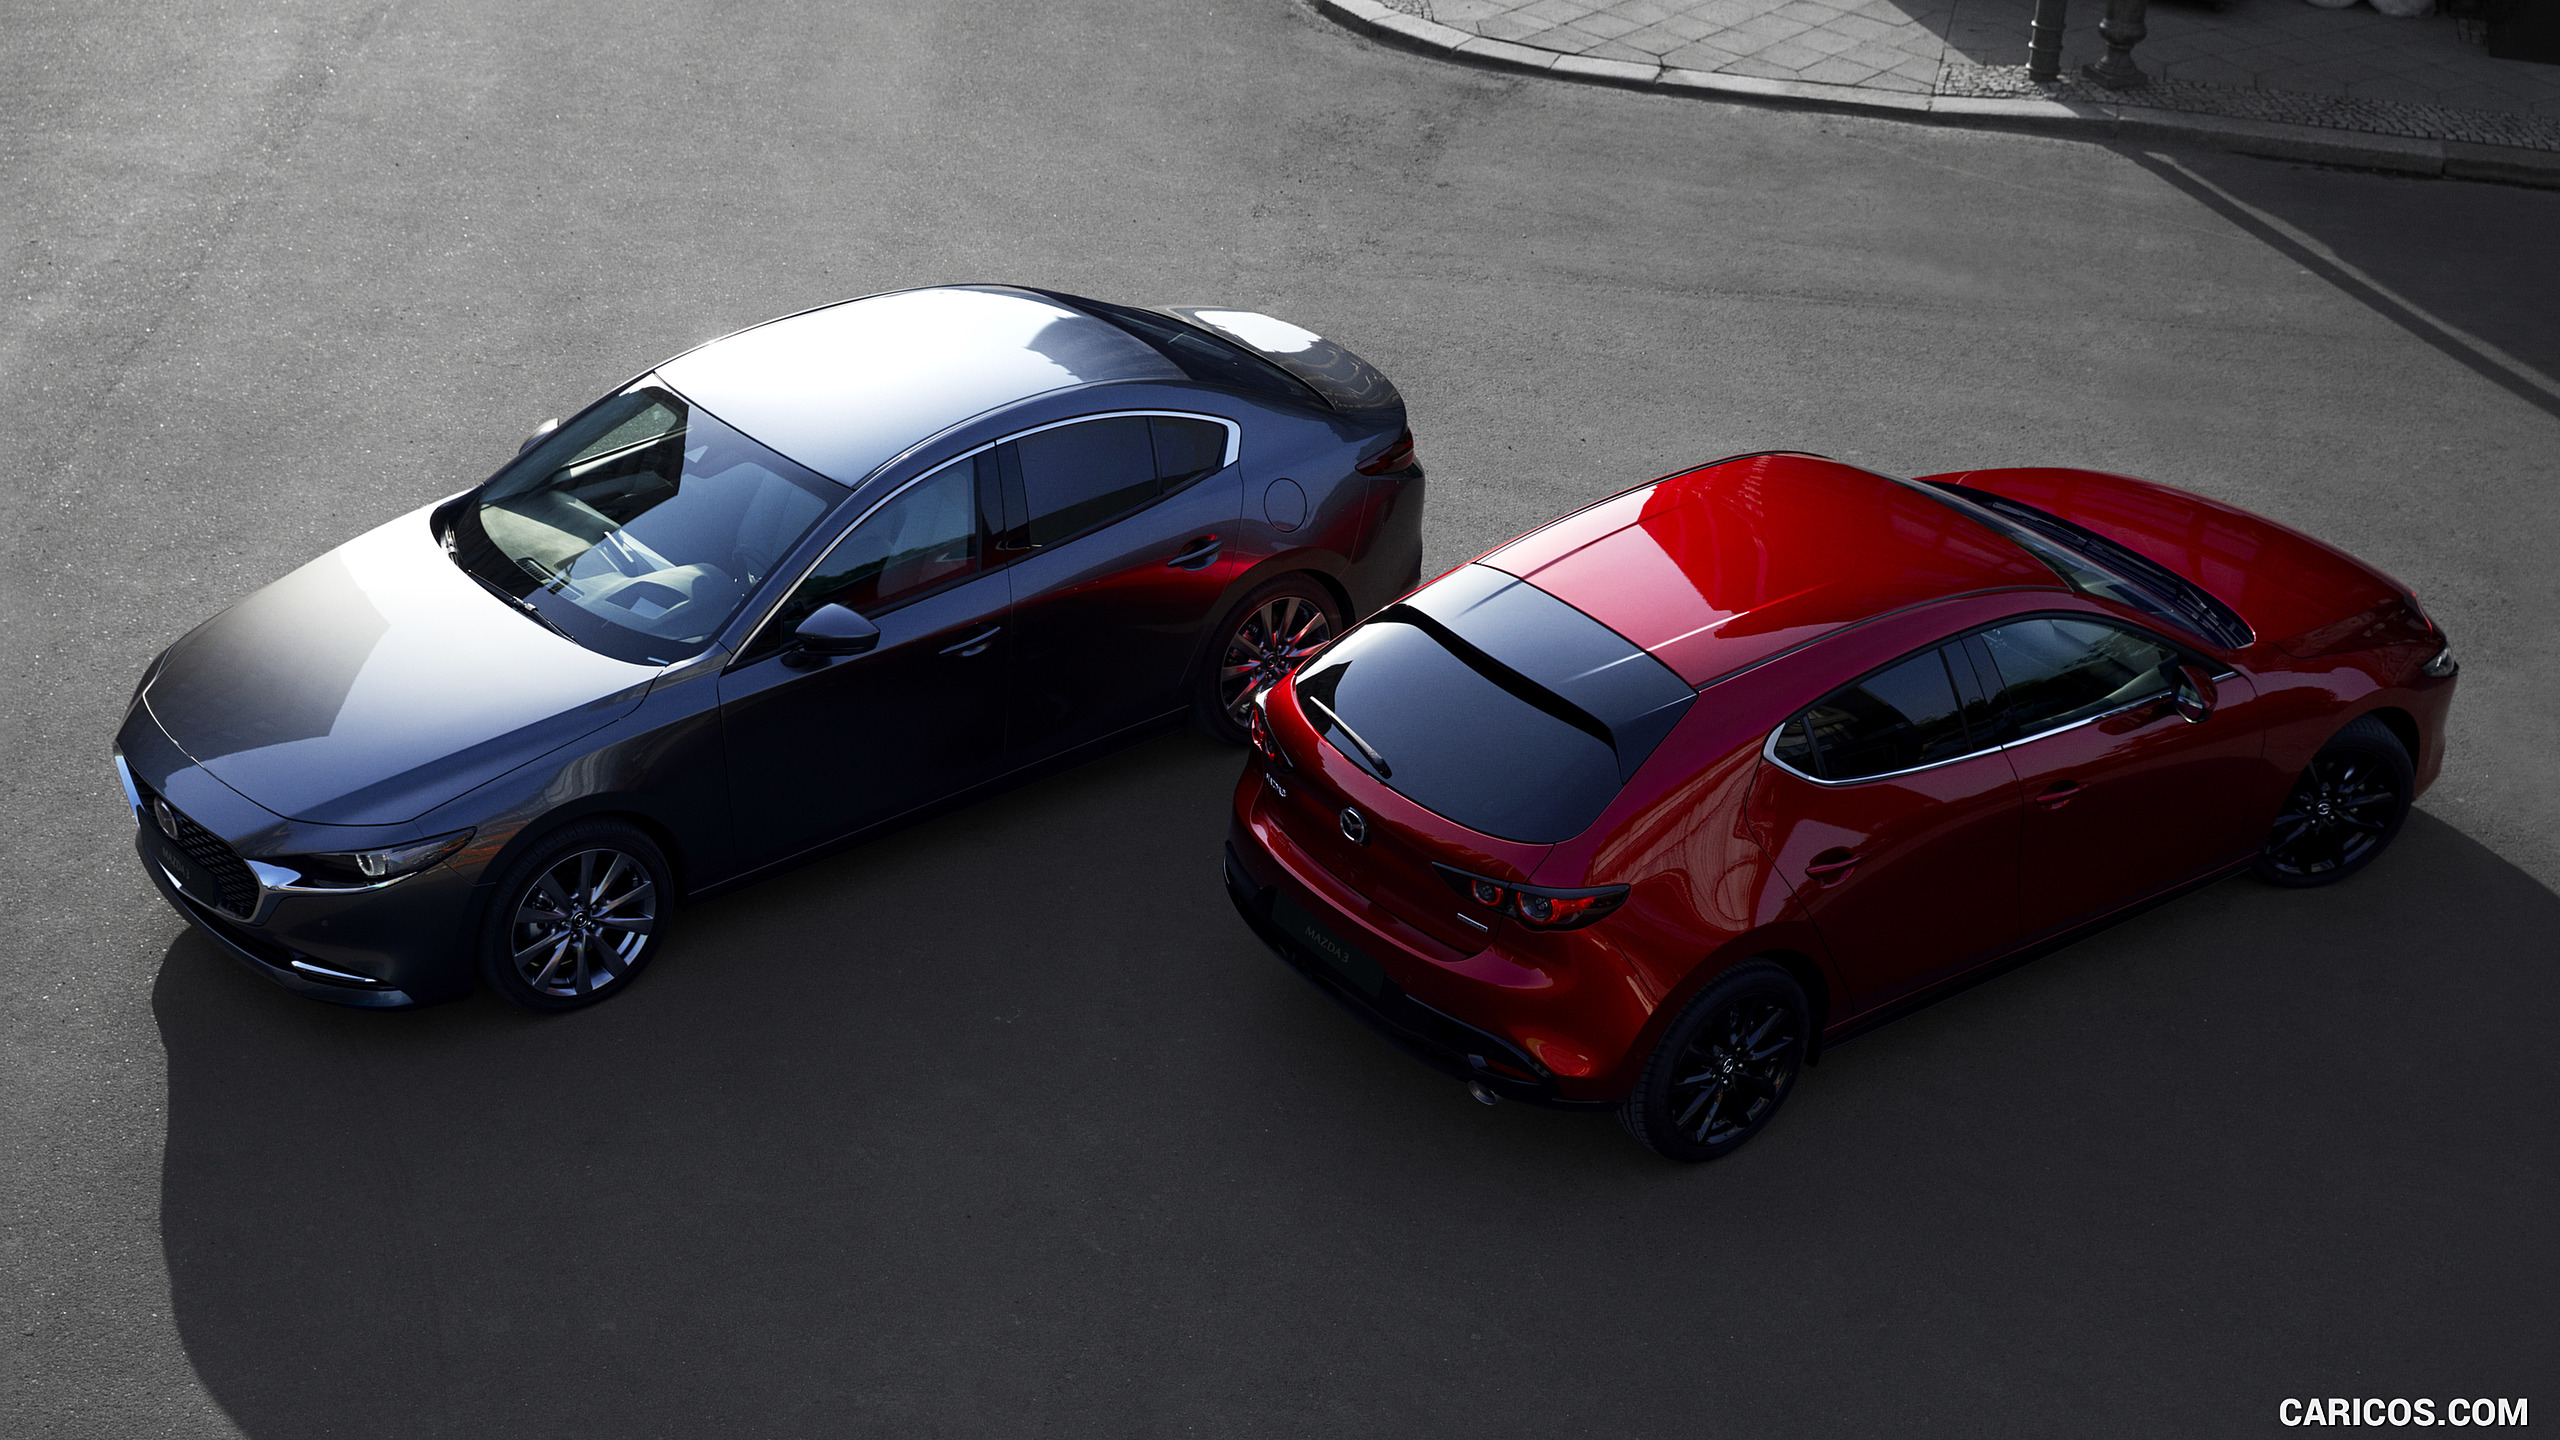 2019 Mazda3 Sedan and Hatchback, #15 of 44